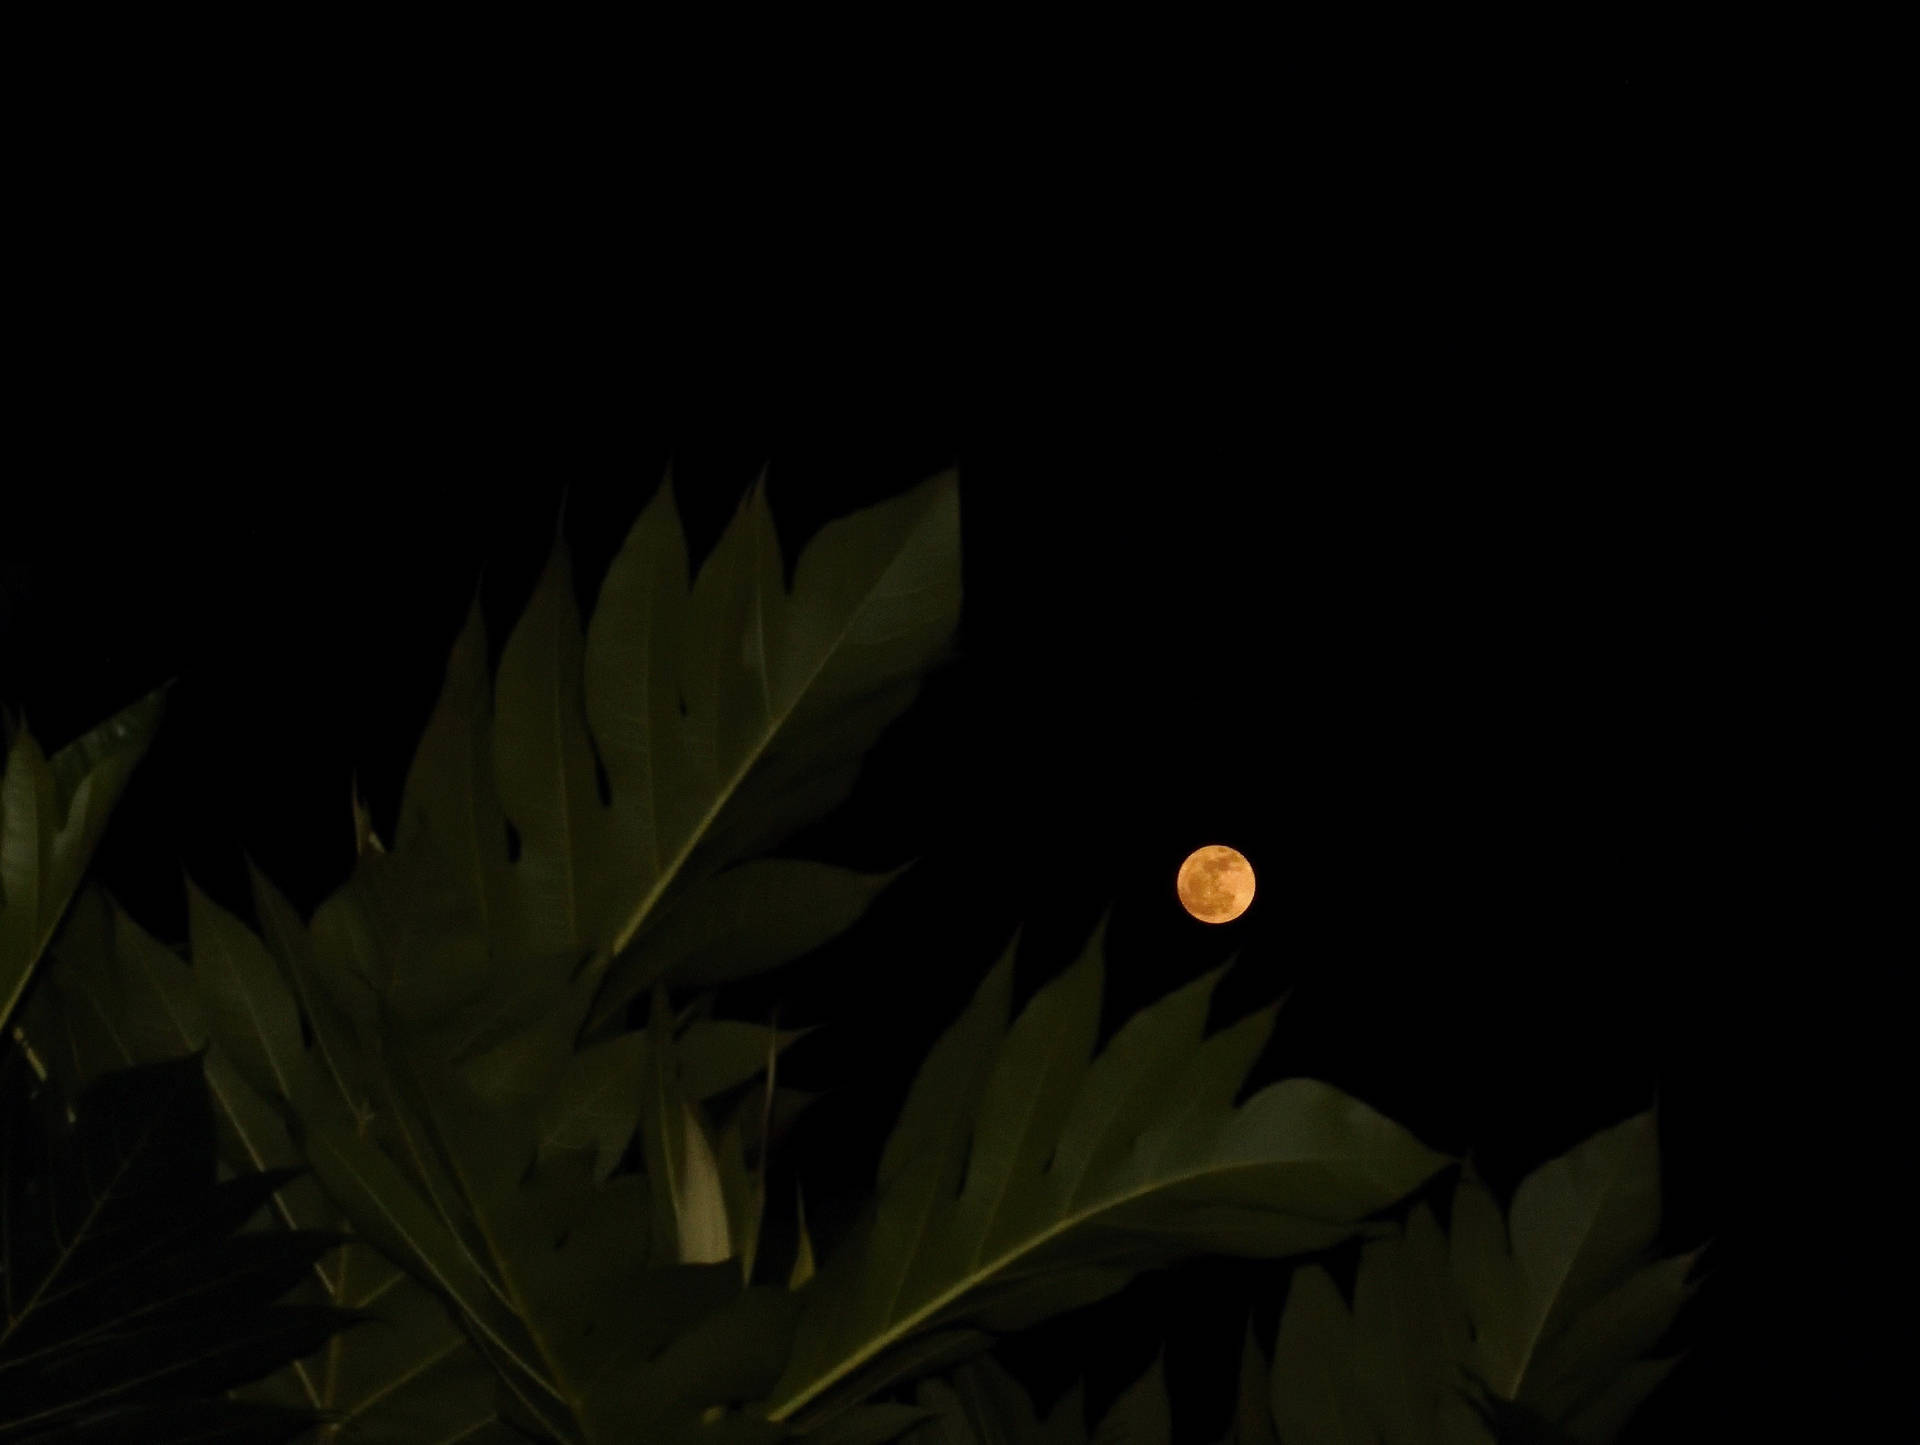 Full Moon Over Leaves Background